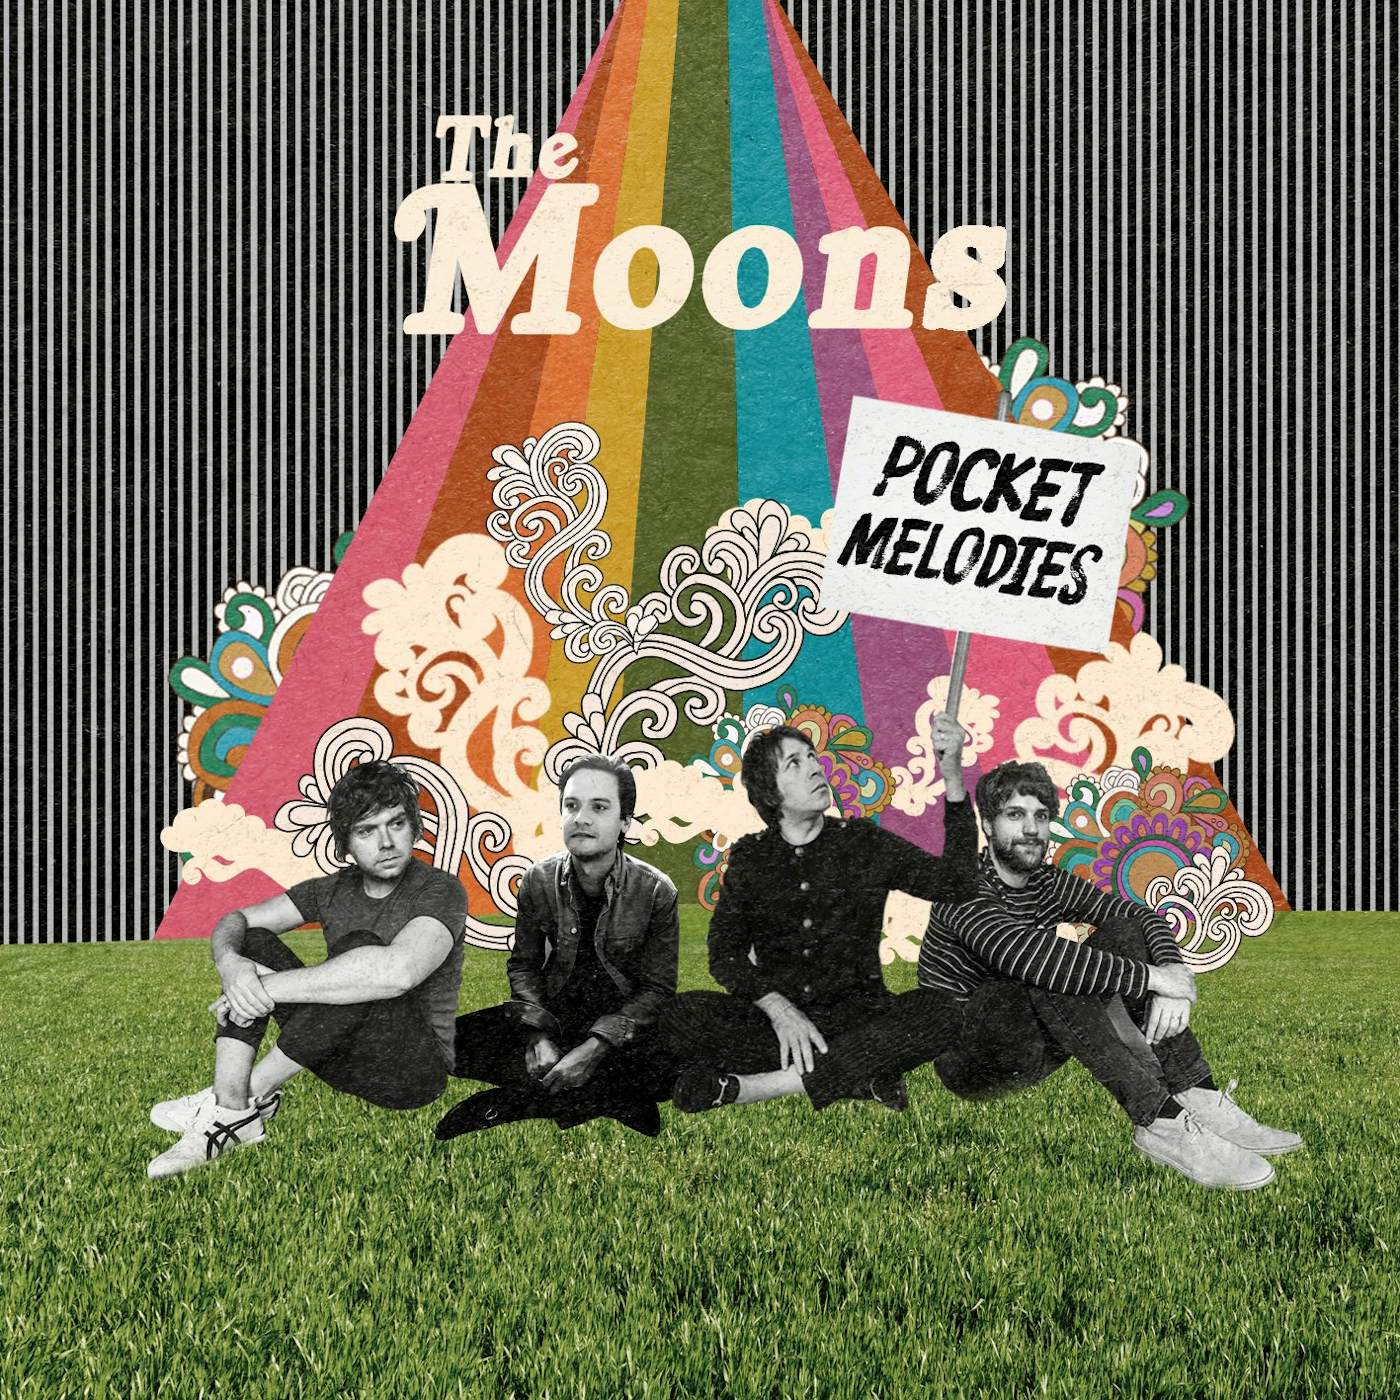 The Moons 'Pocket Melodies' Vinyl Record